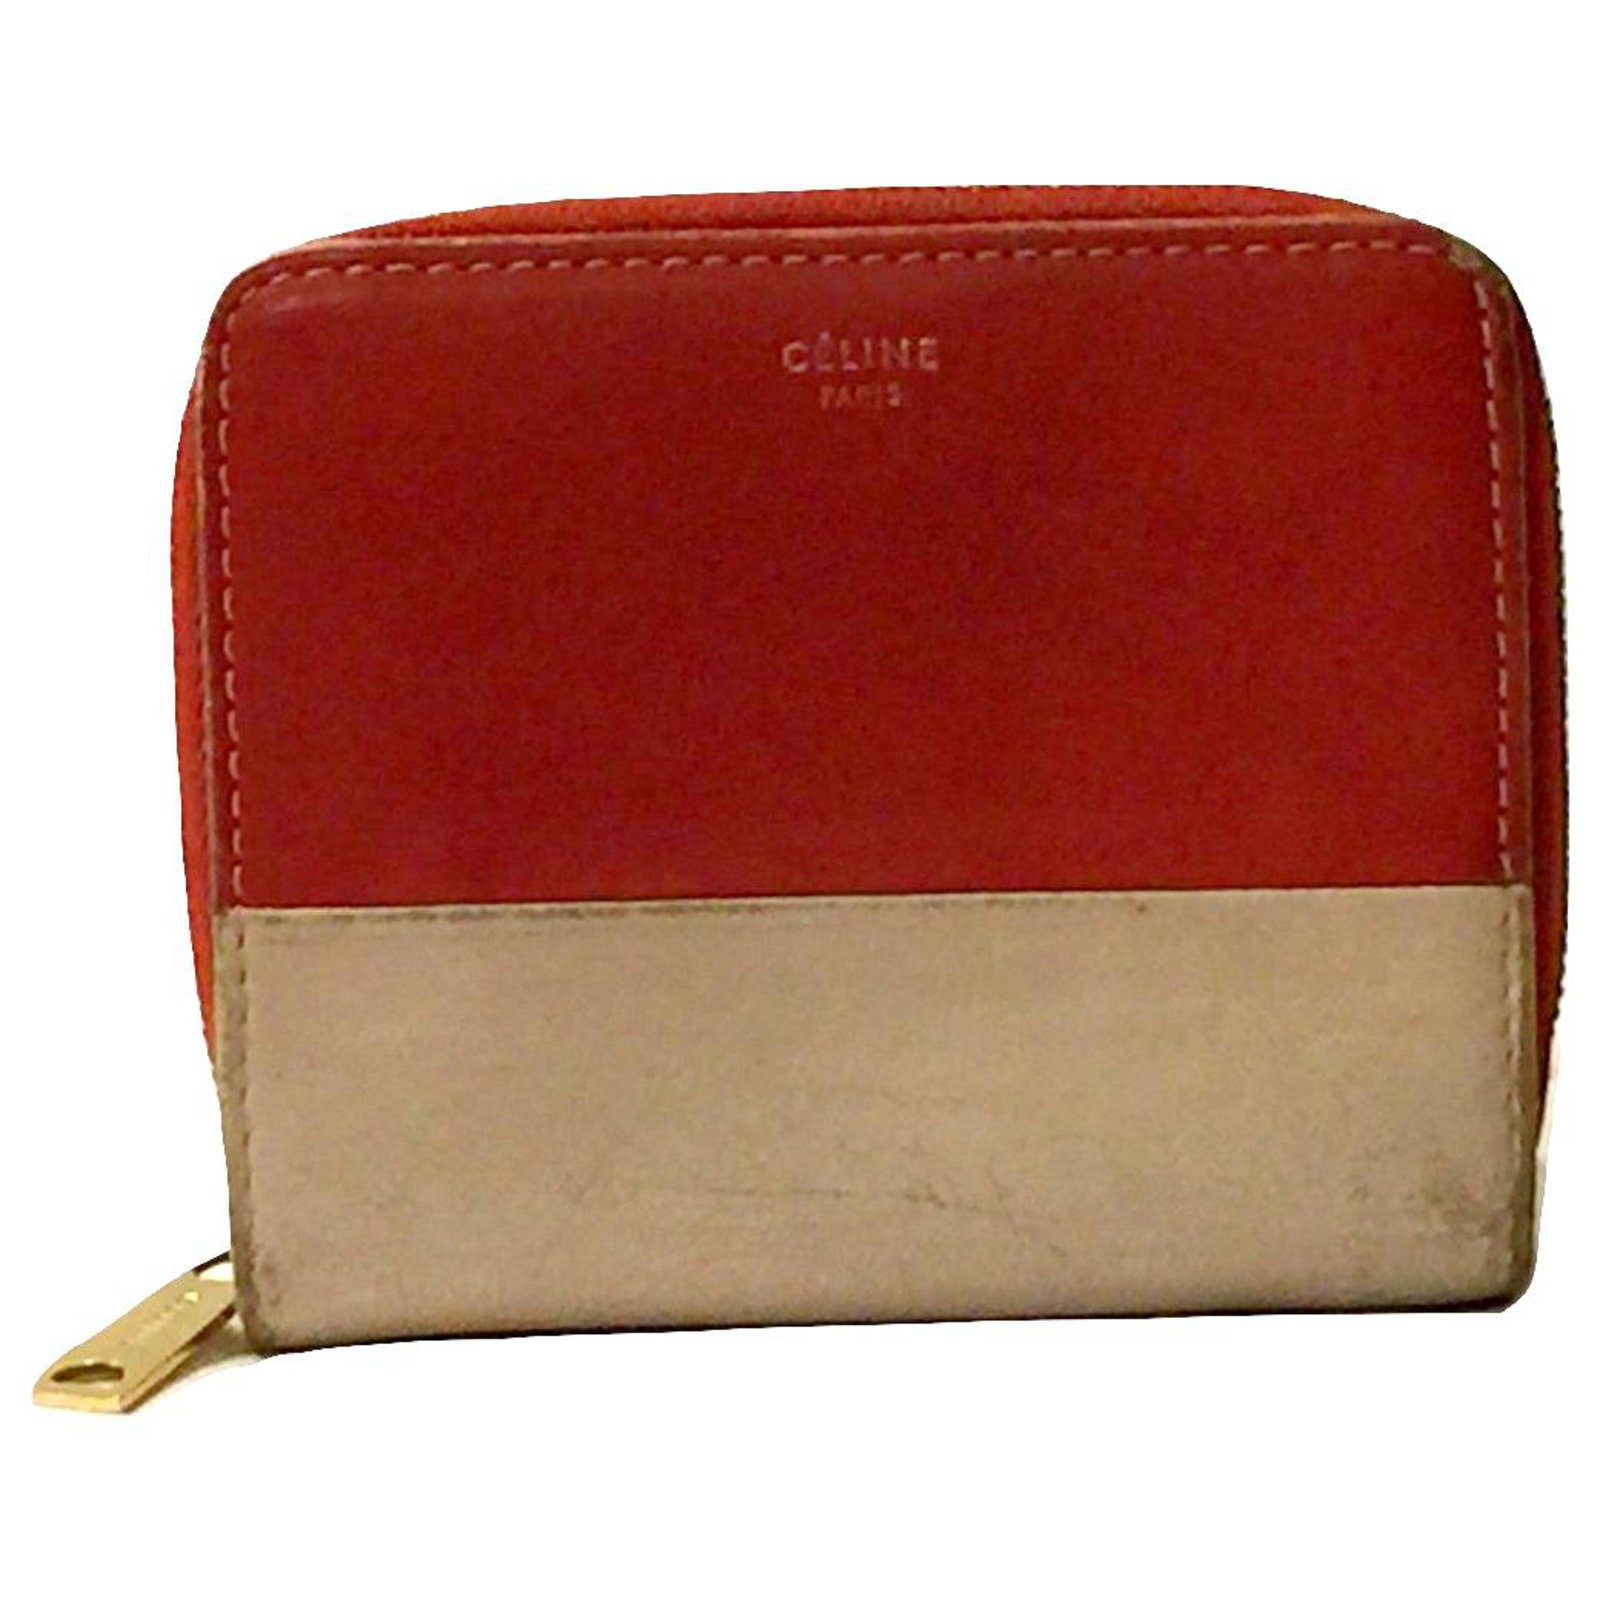 CELINE compact zipped wallet